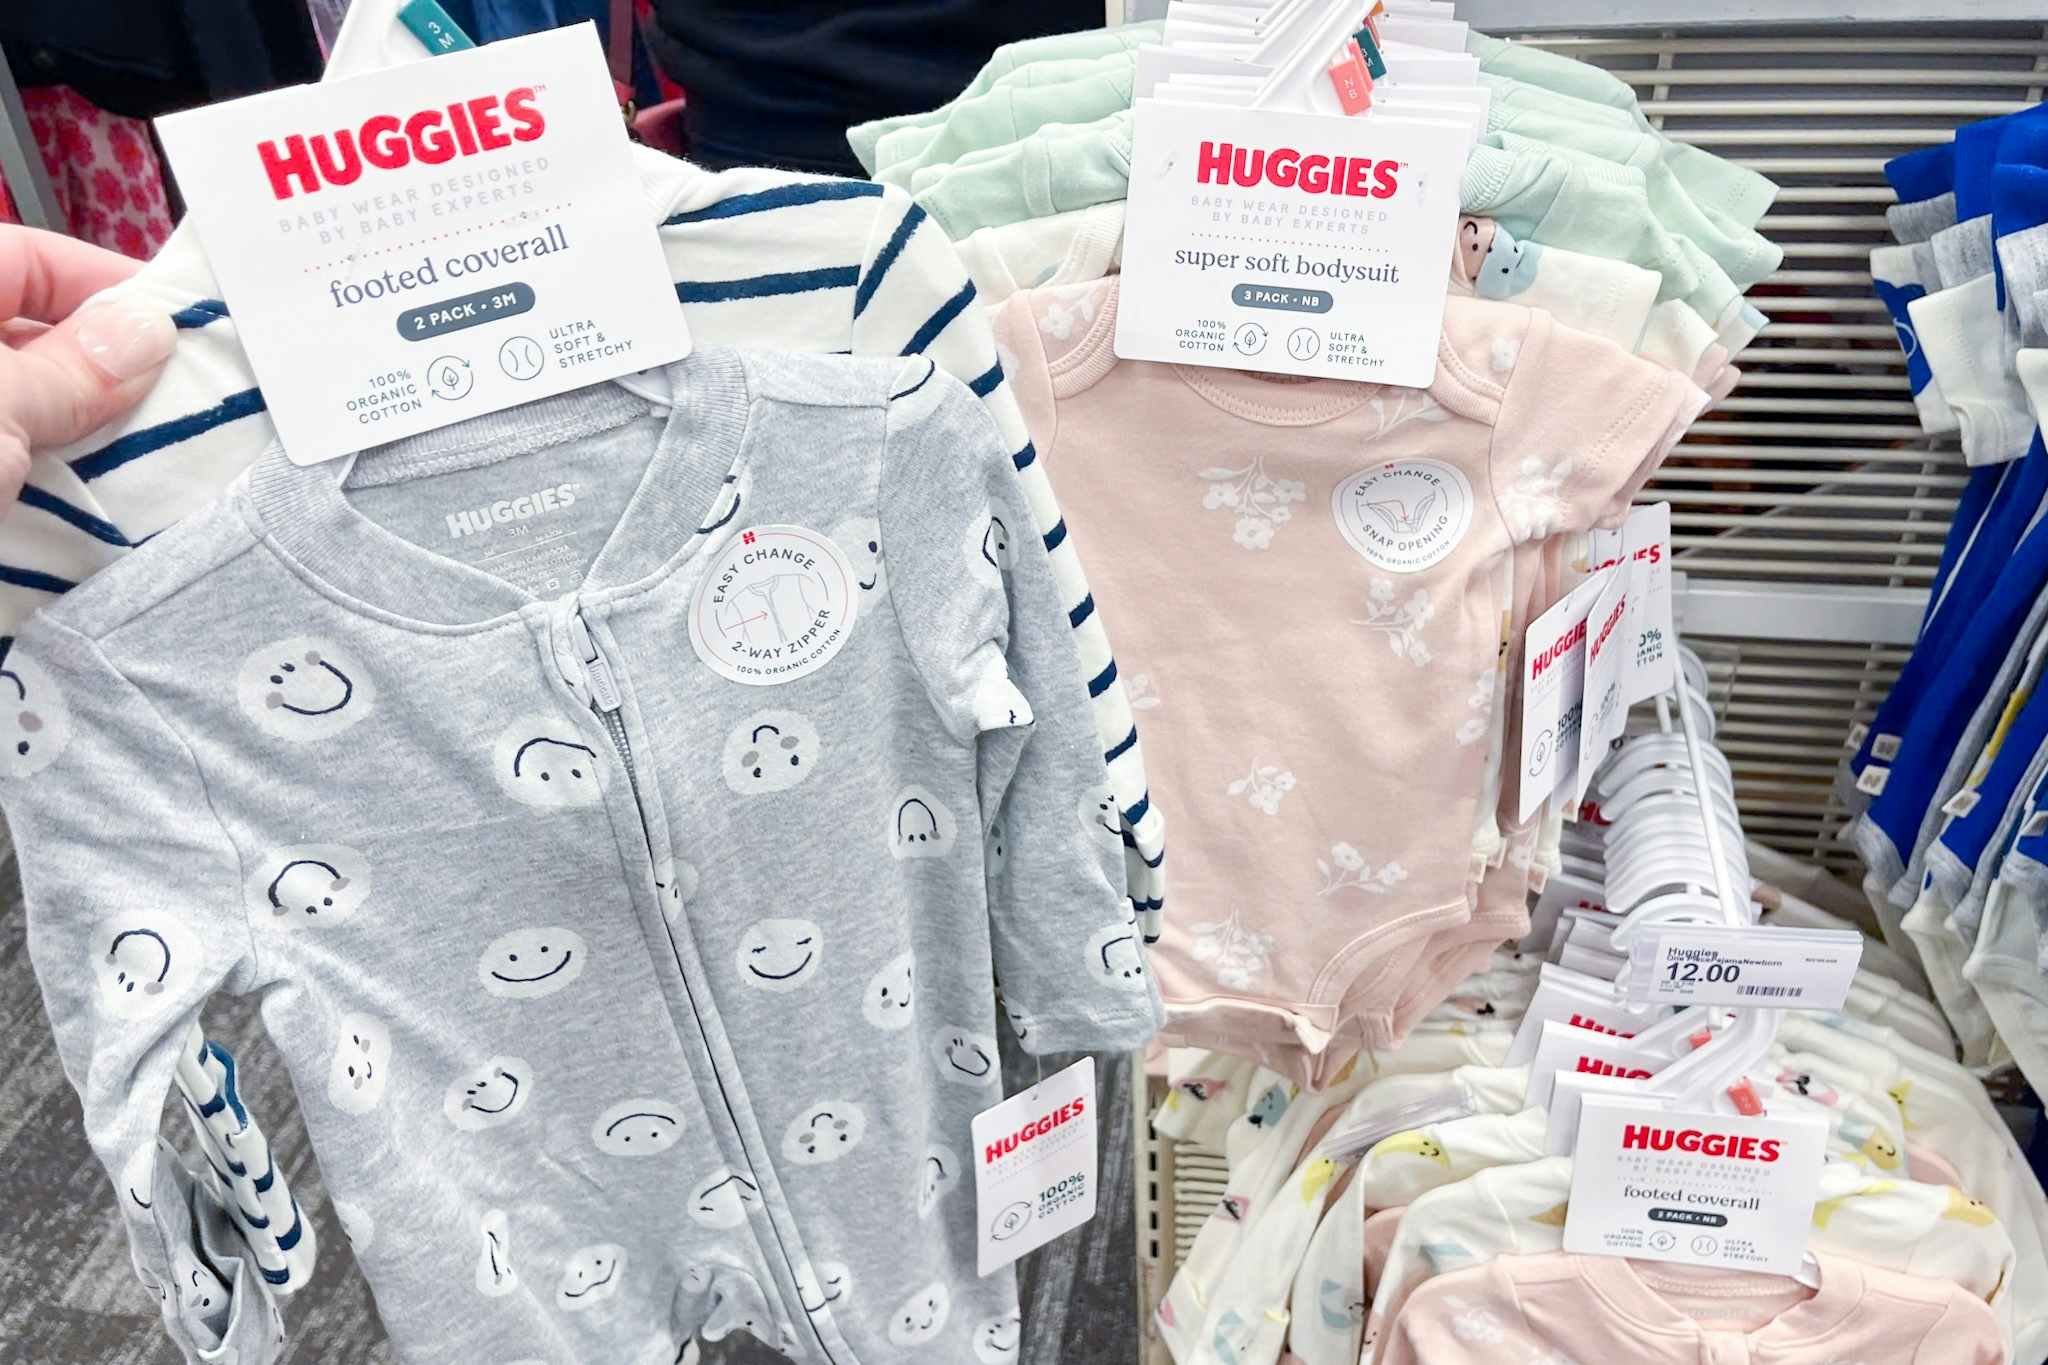 New Huggies Organic Baby Apparel on Sale at Target: $4.56 Pajamas and More